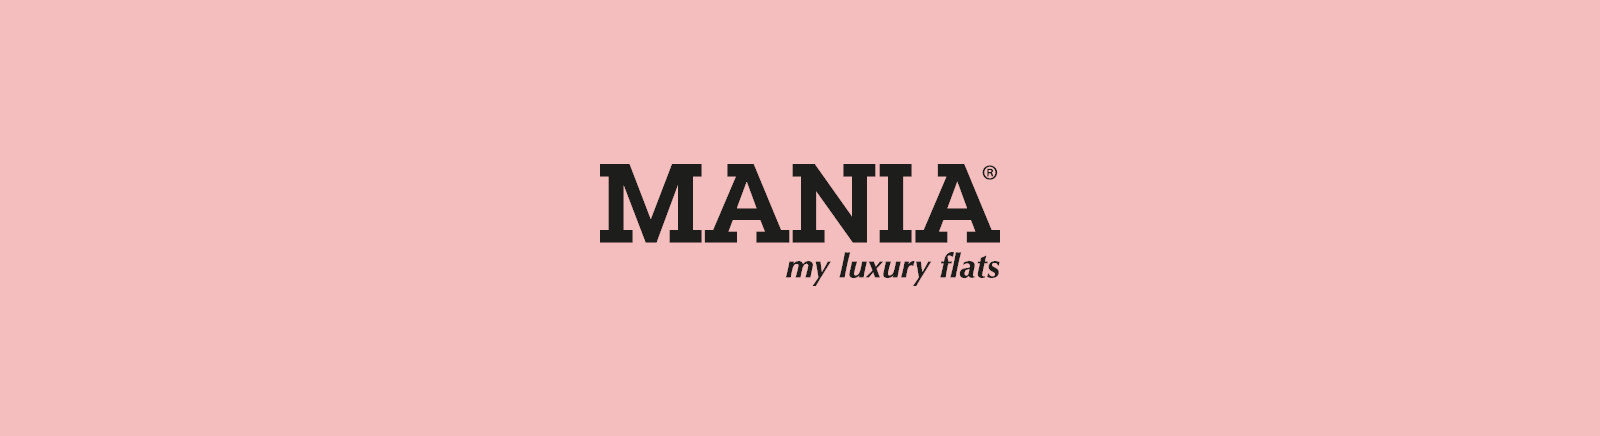 Vielseitige Mania Schuhe online bestellen | Juppen